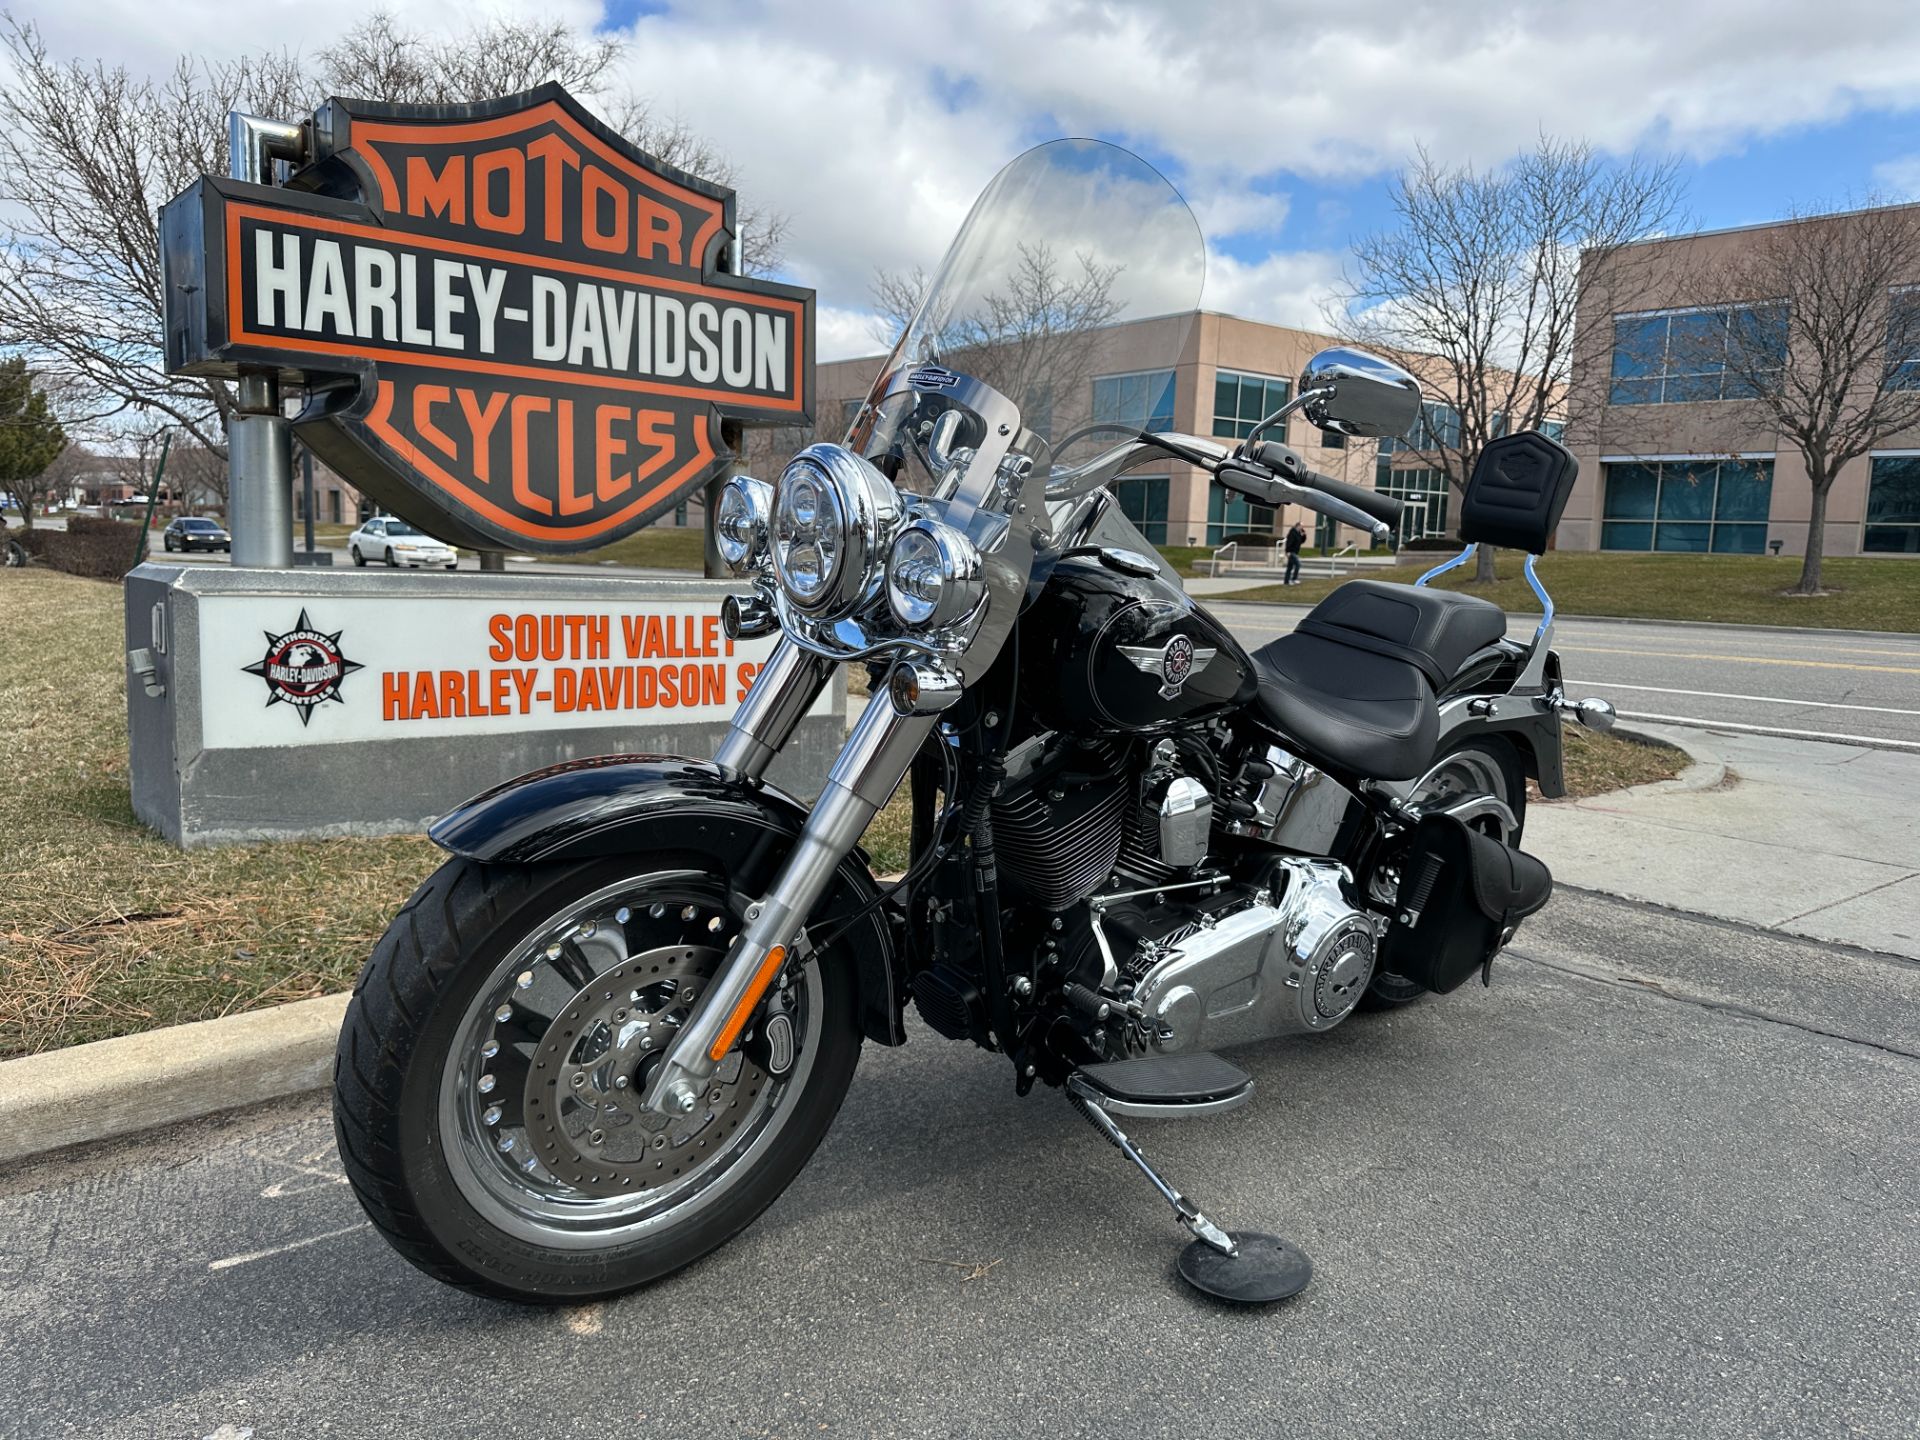 2016 Harley-Davidson Fat Boy® in Sandy, Utah - Photo 8